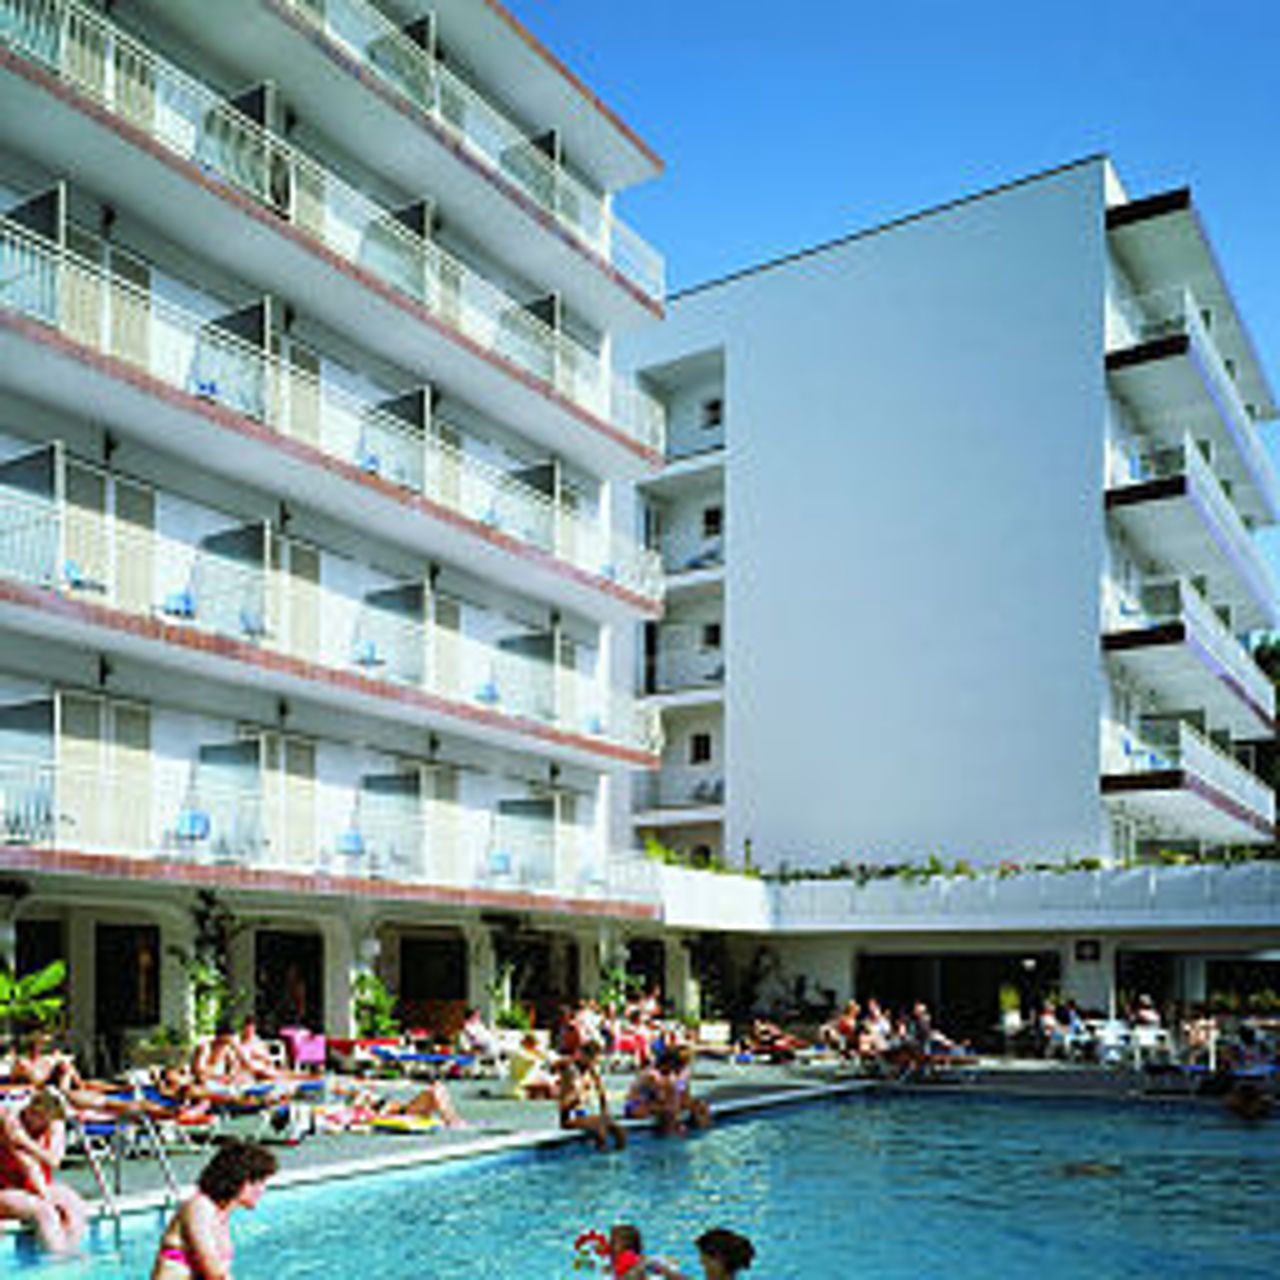 Hotel Garbi Park - Lloret de Mar - HOTEL INFO